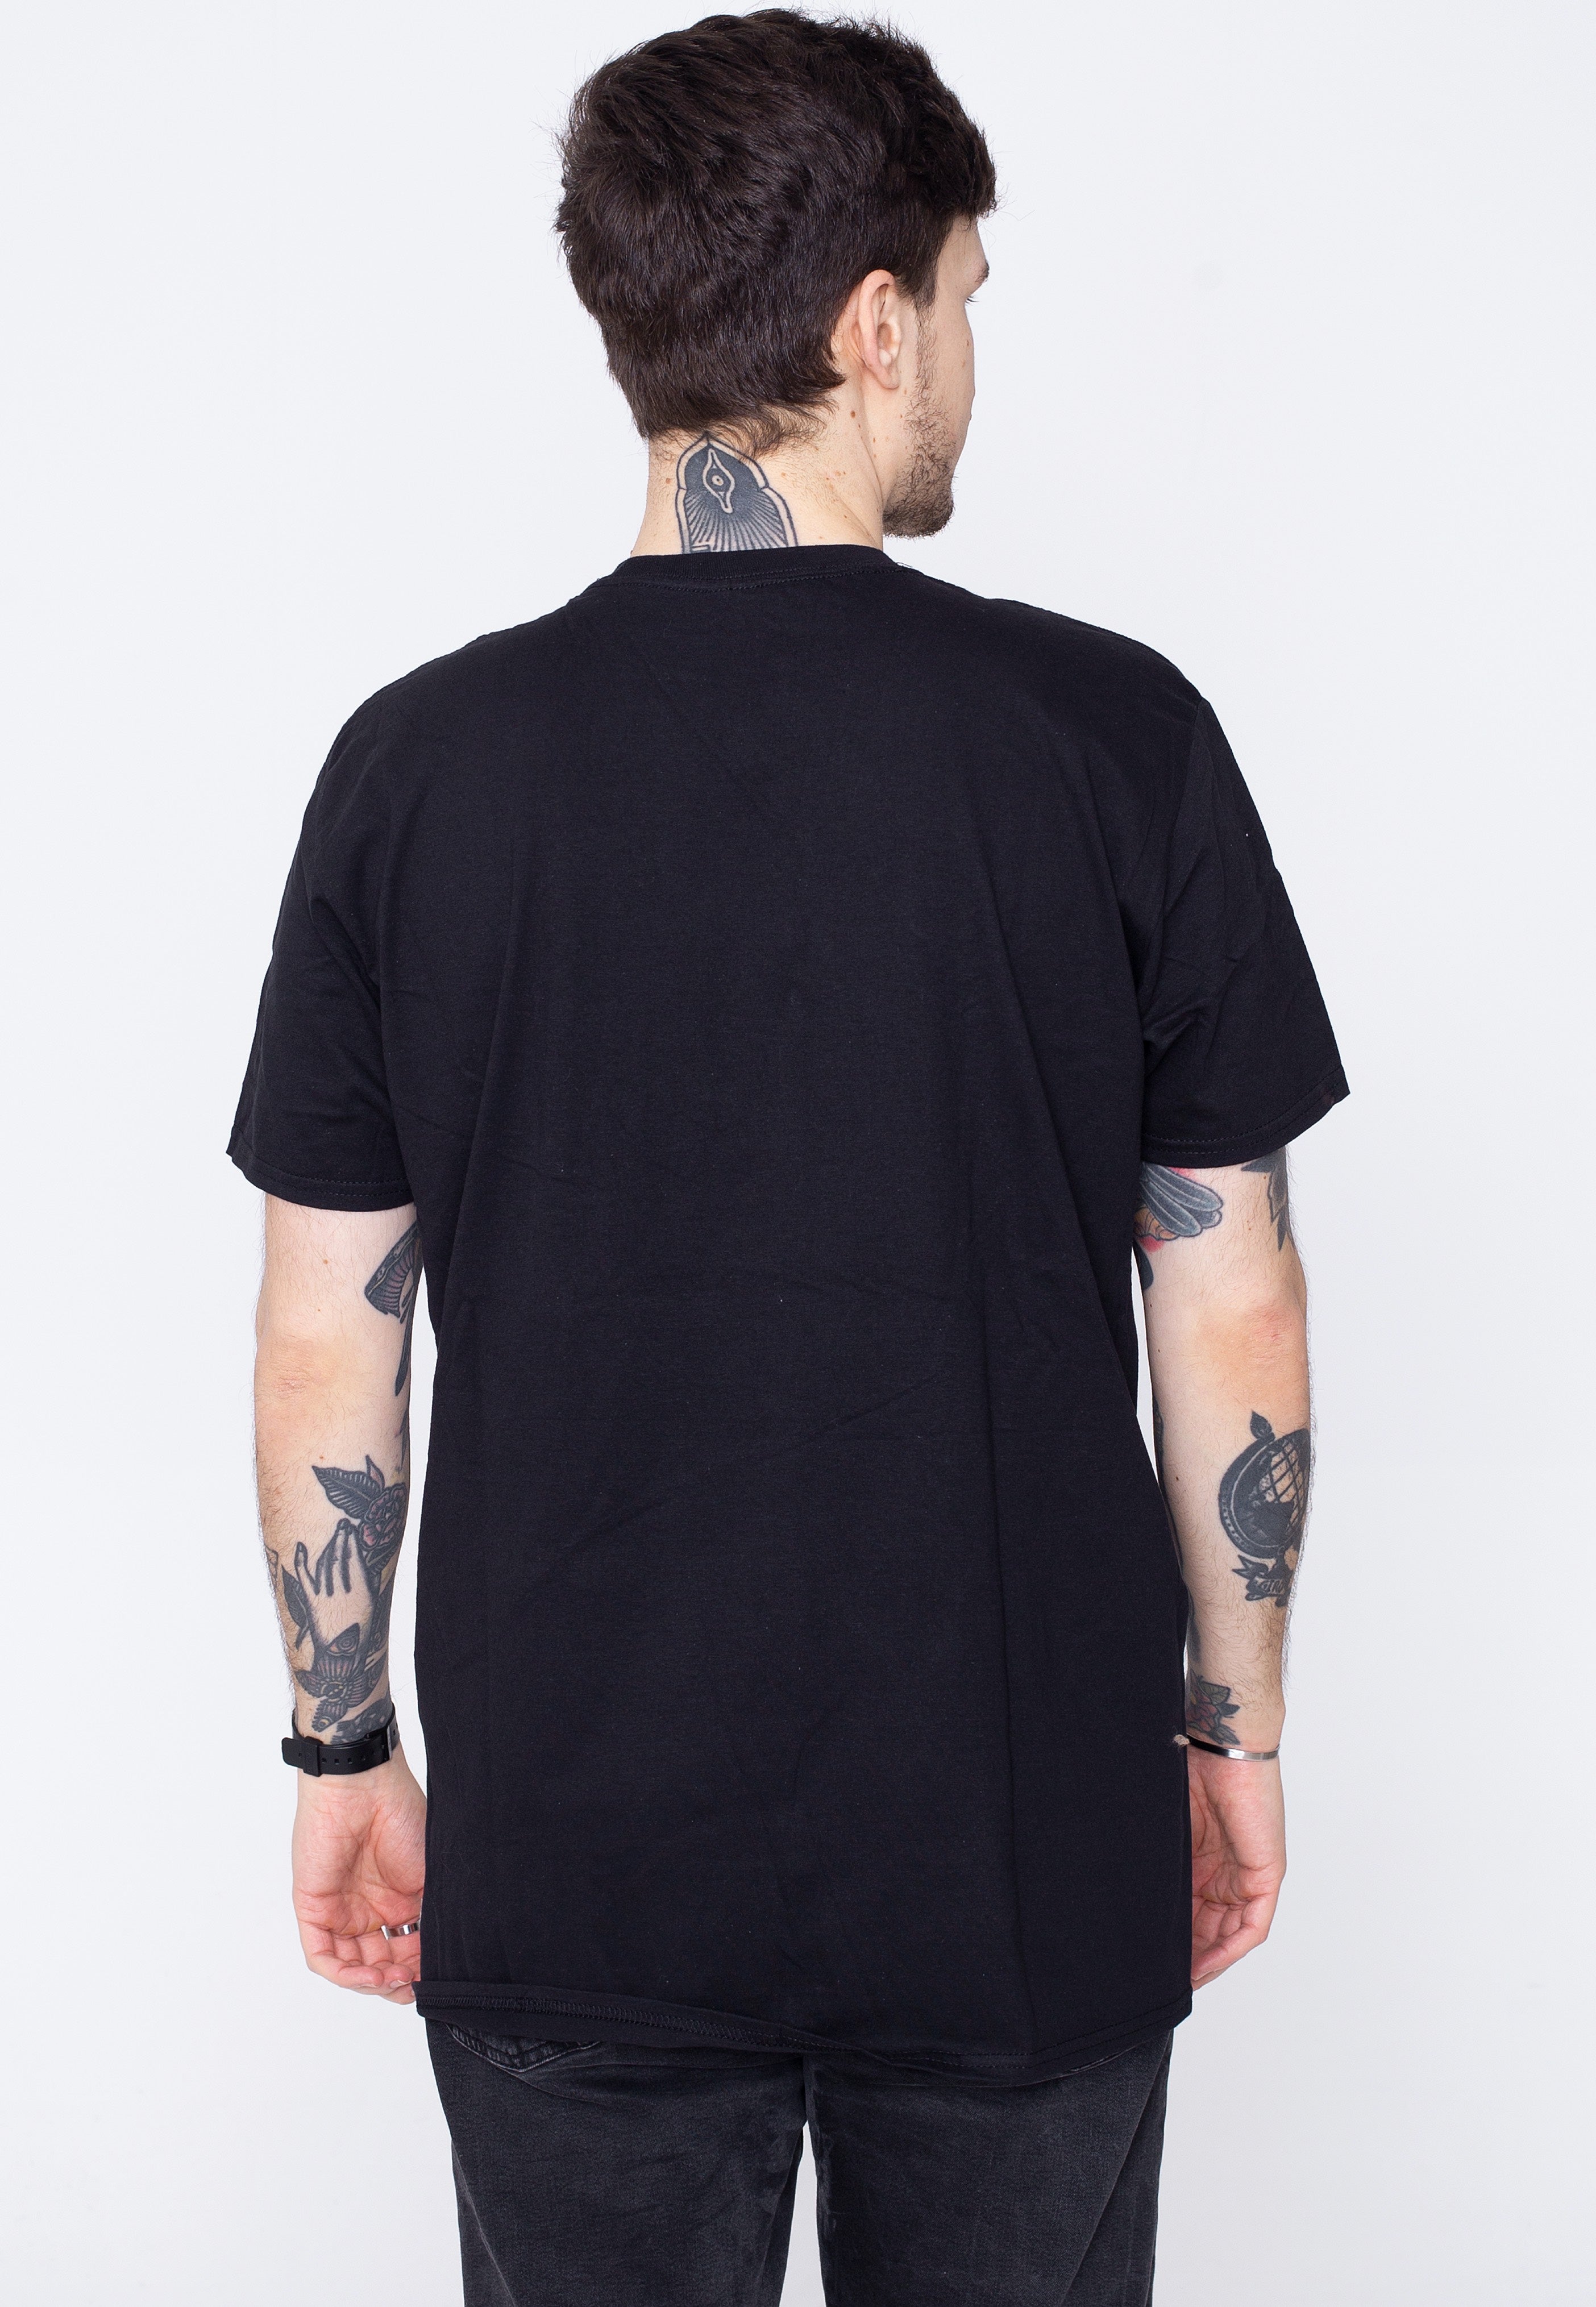 Korn - Skulldelis - T-Shirt | Men-Image